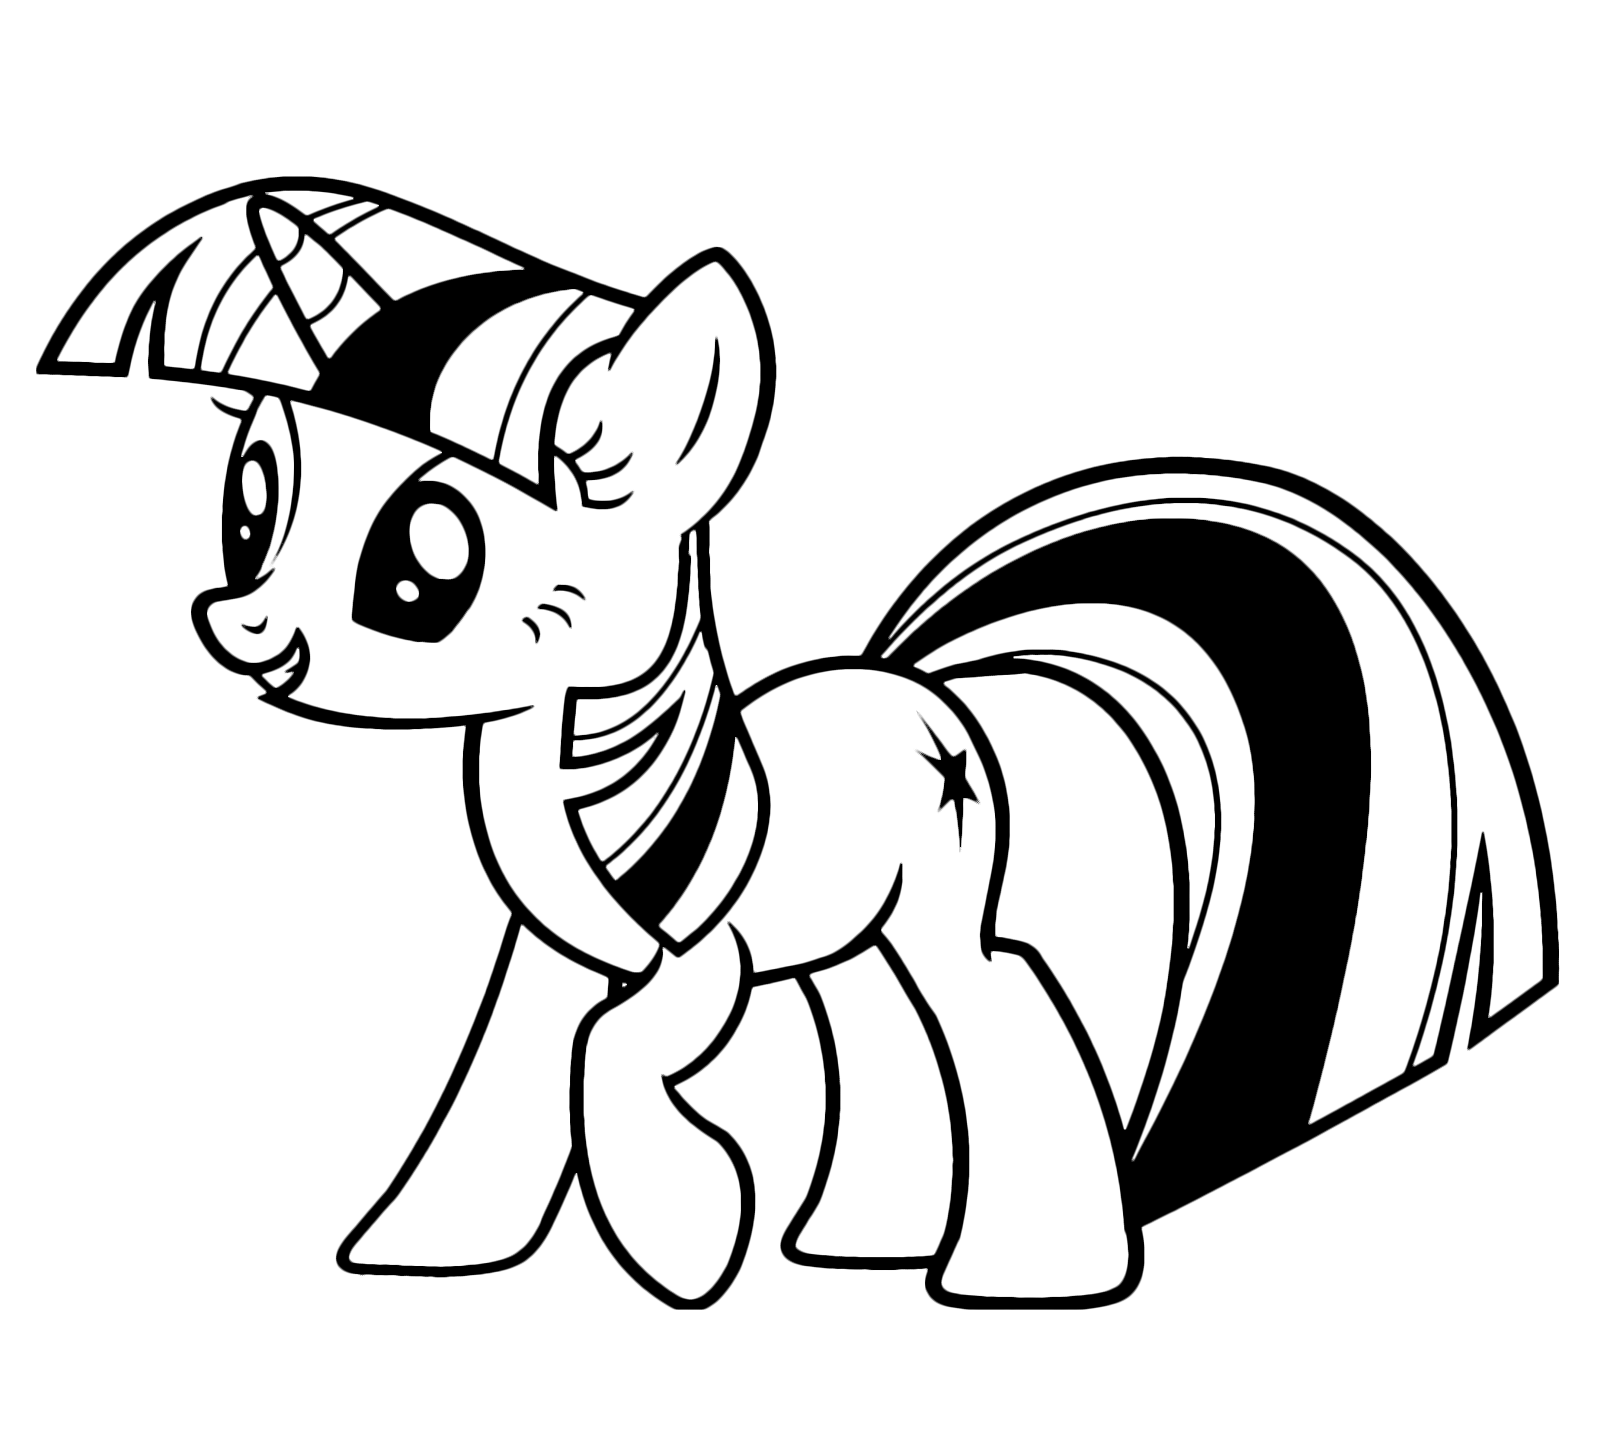 My Little Pony - Twilight Sparkle with her sun symbol